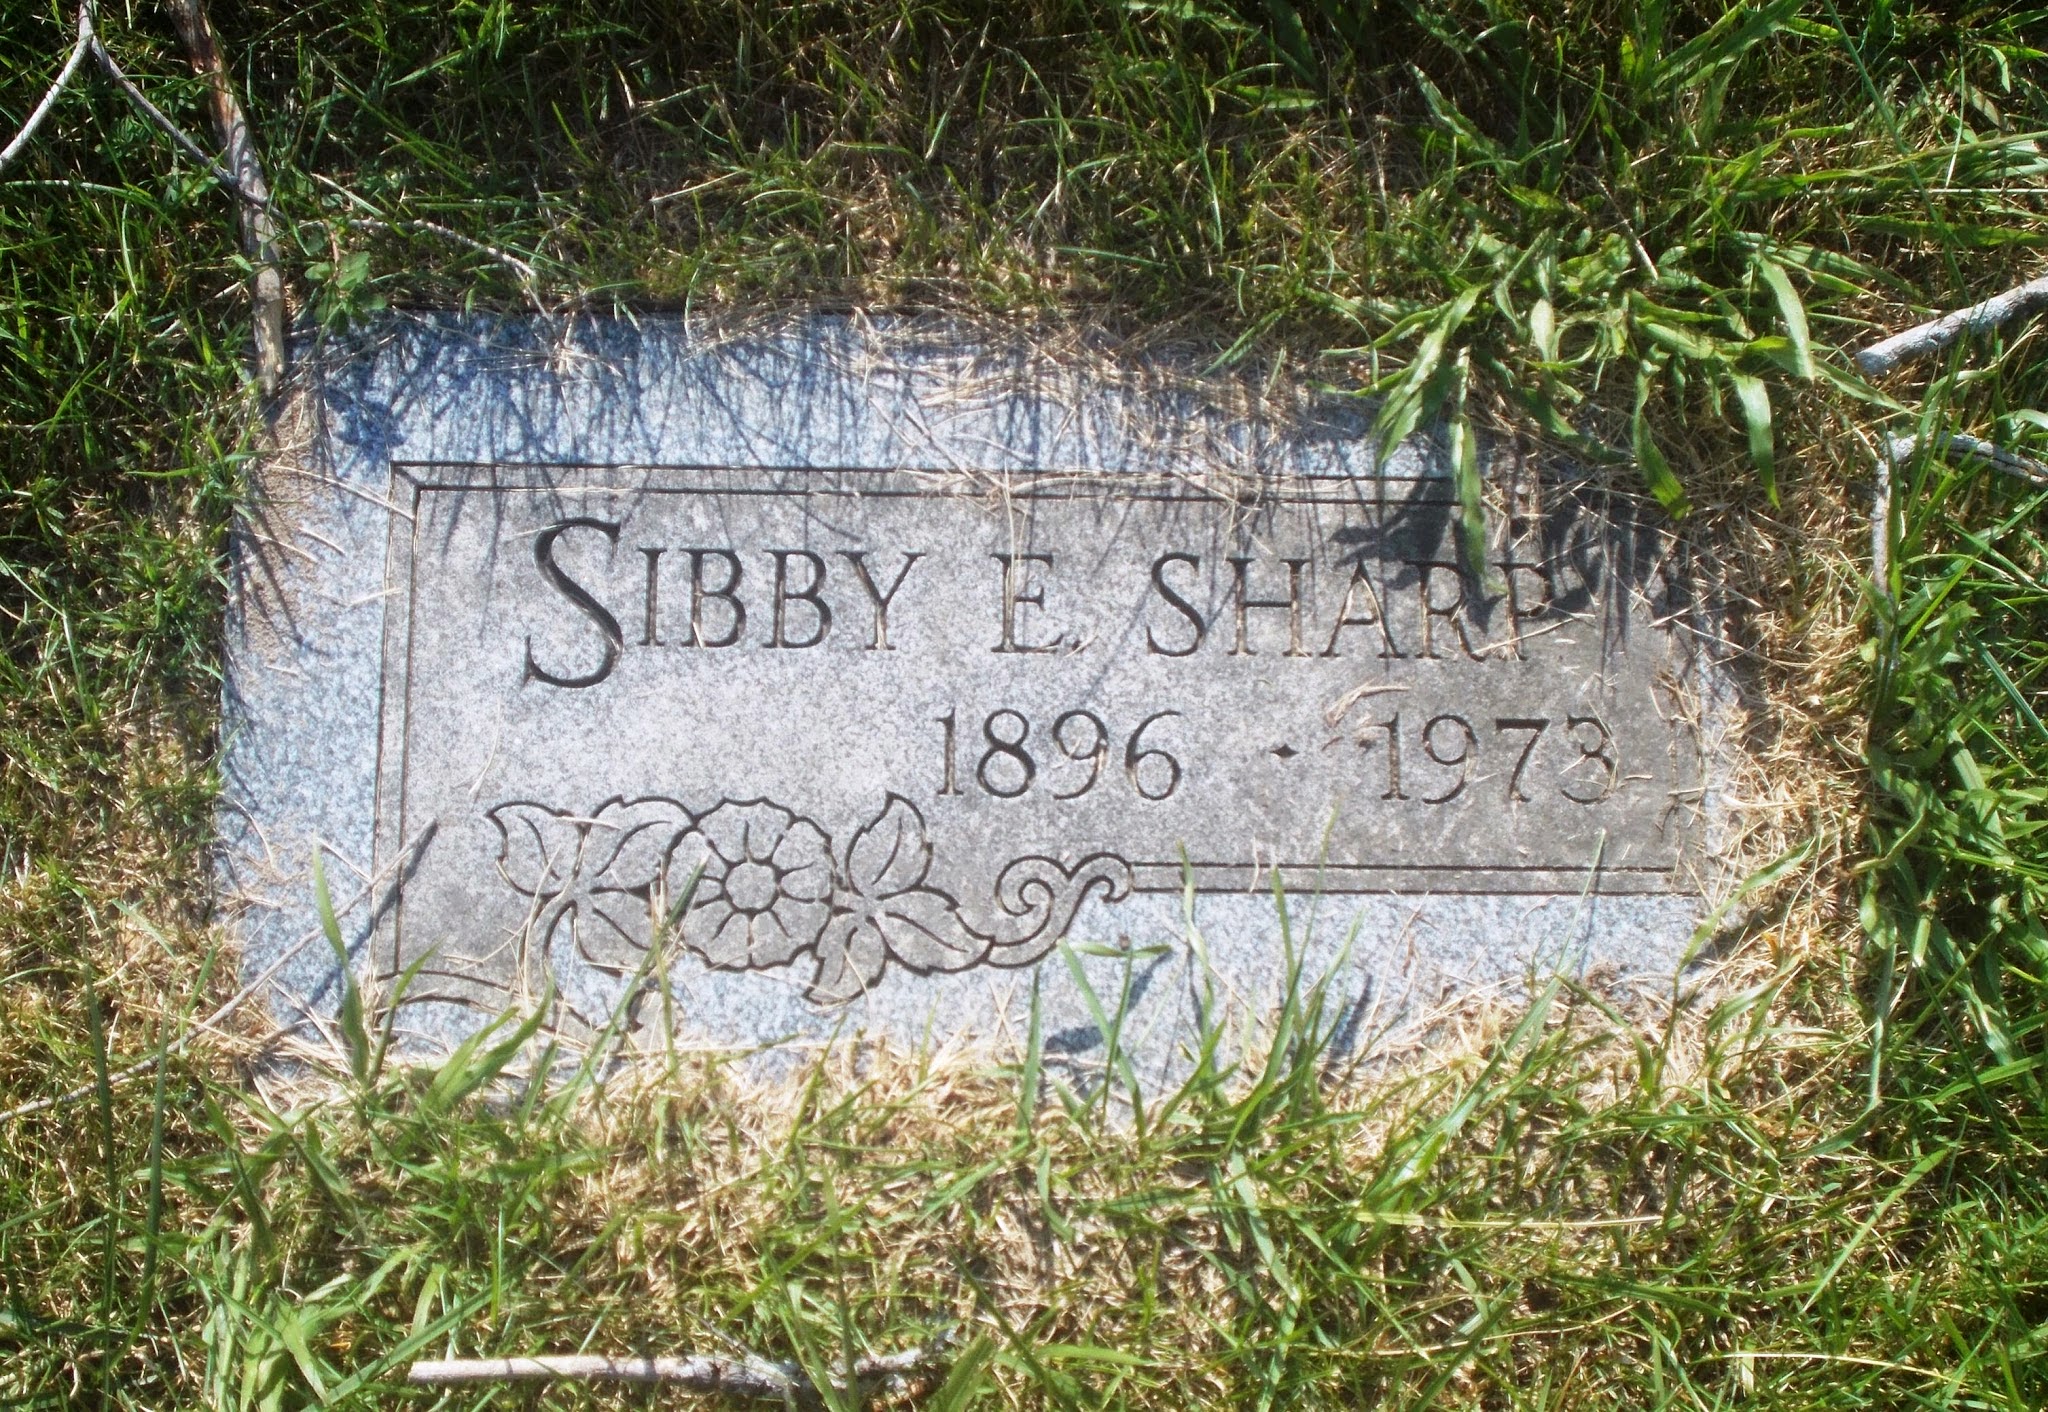 Sibby E Sharp